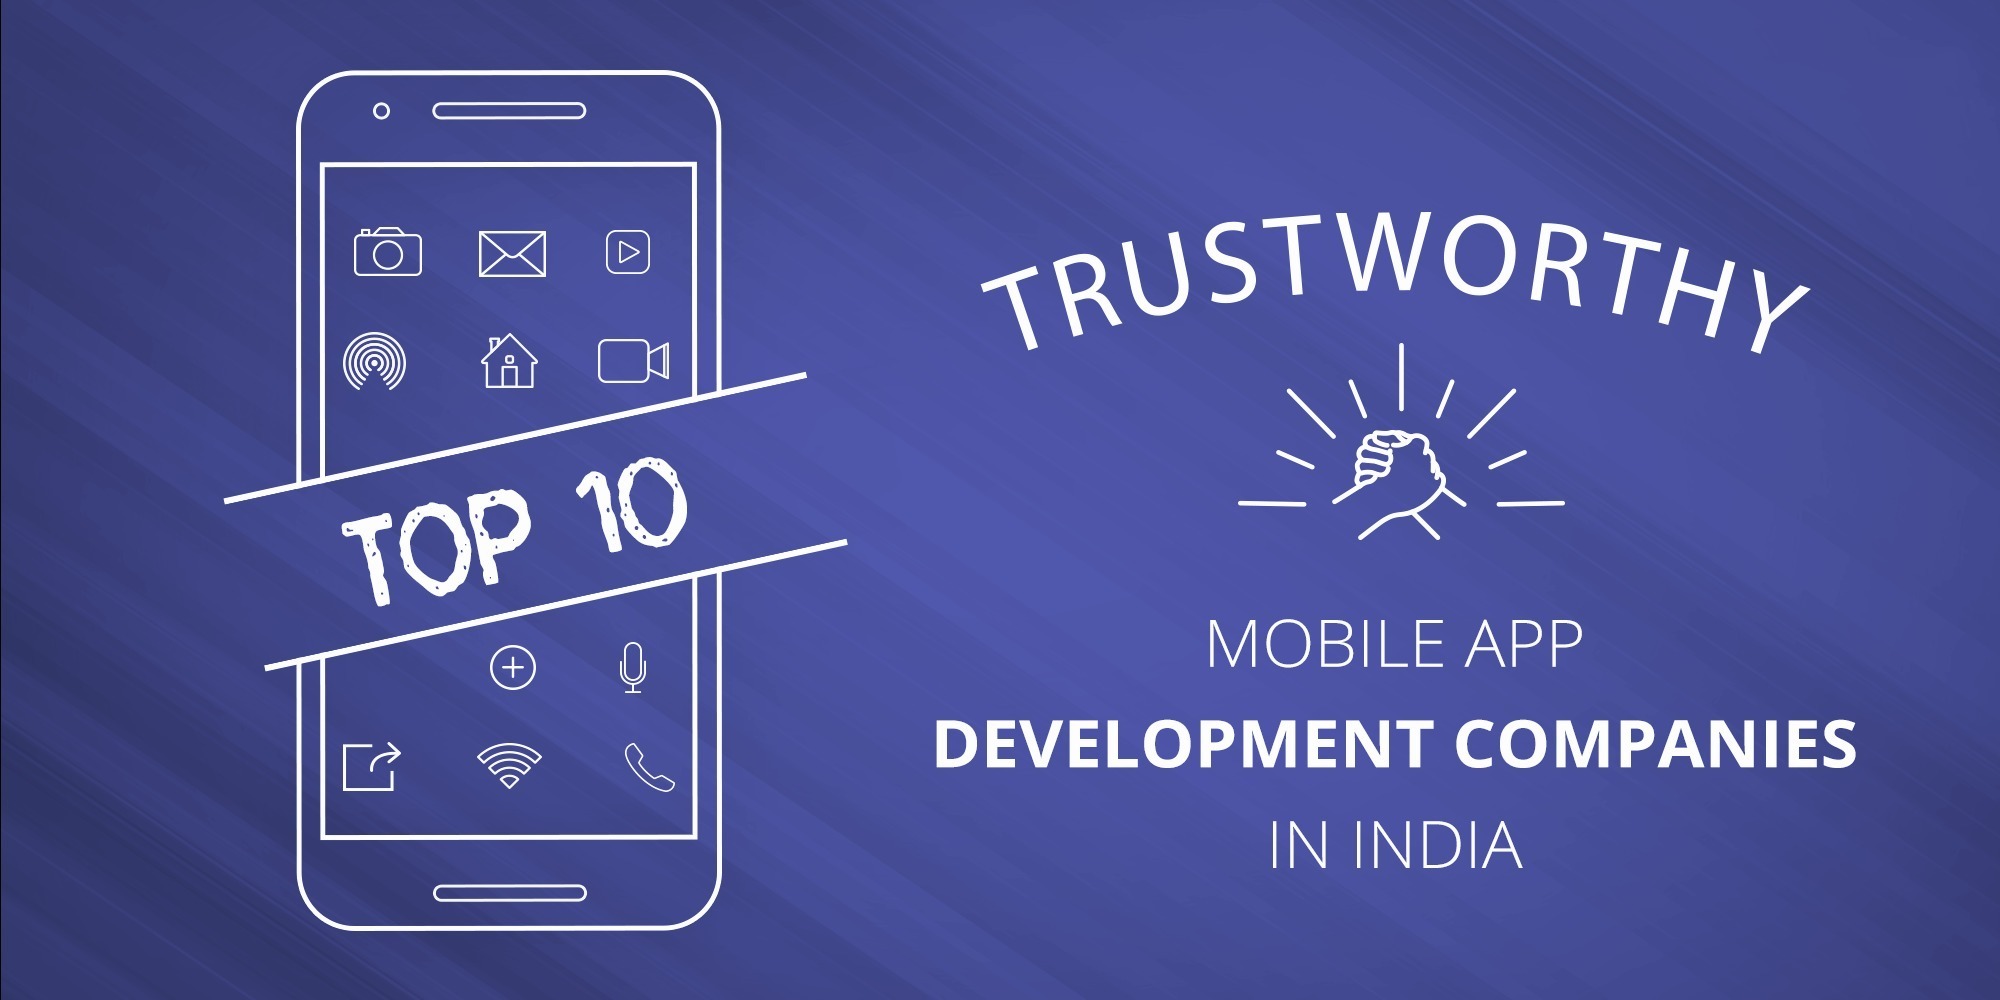 Top 10 Mobile Application Development Companies